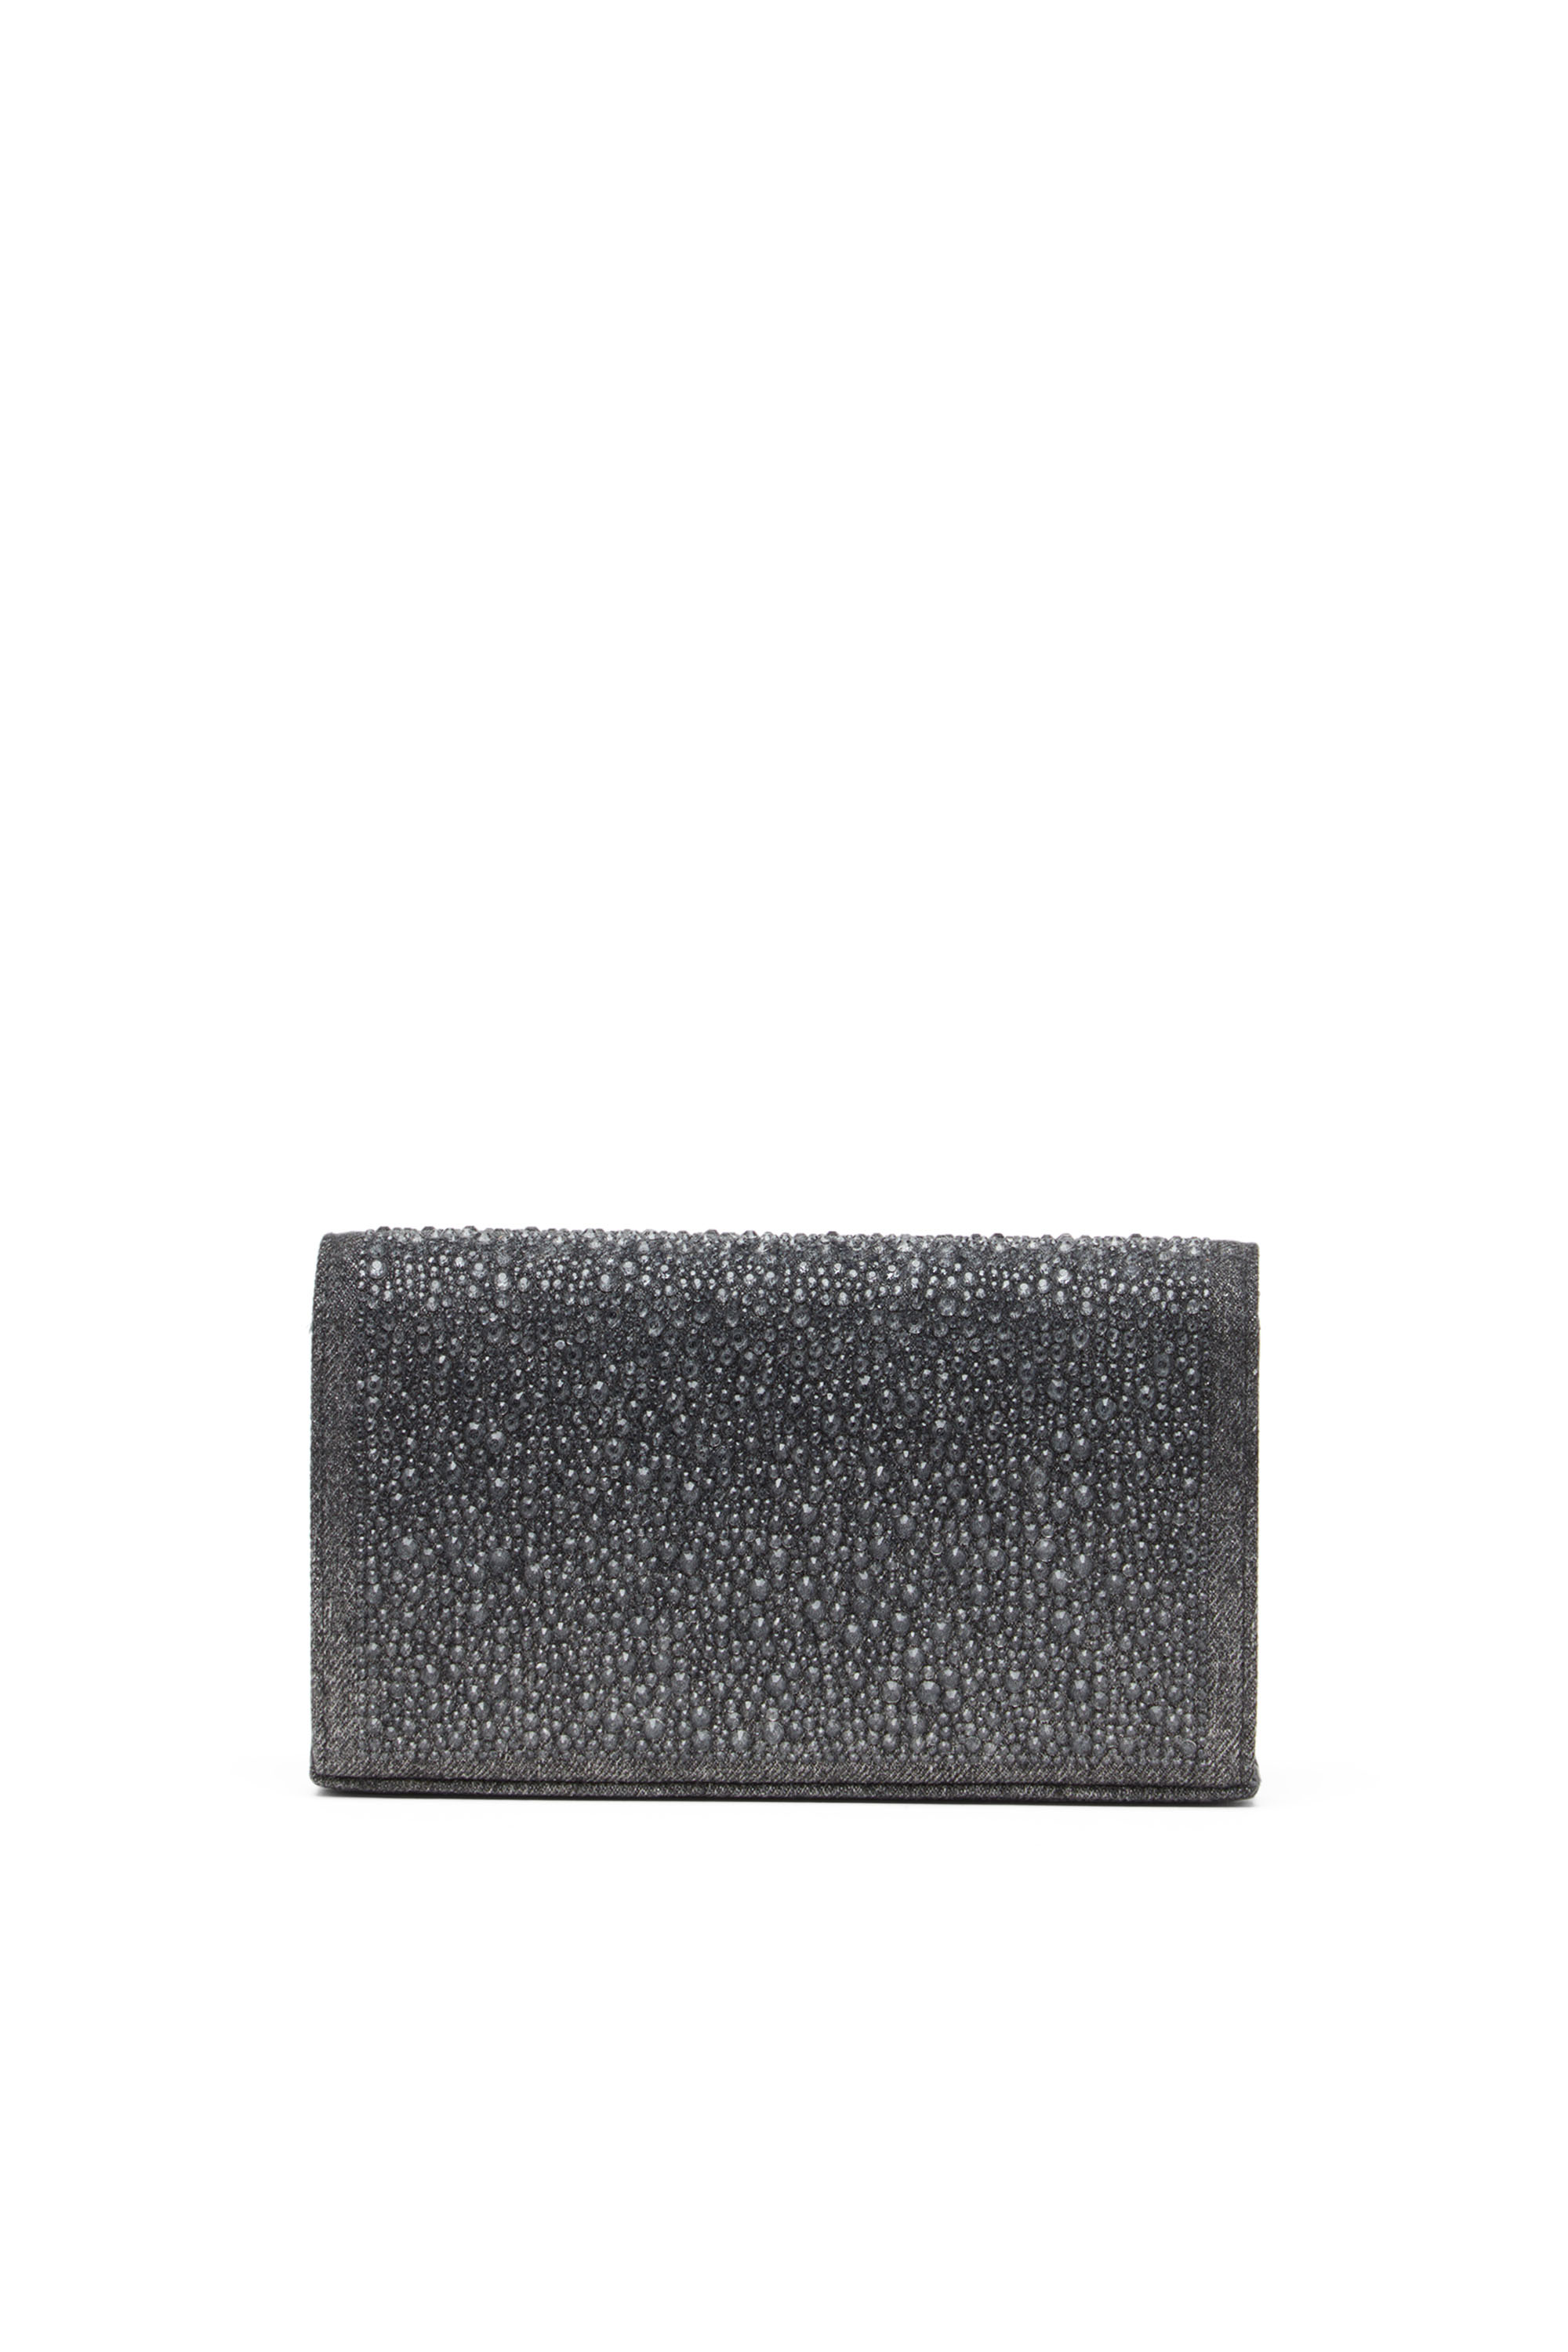 Diesel - 1DR WALLET STRAP, Female Wallet purse in crystal denim in ブラック - Image 2